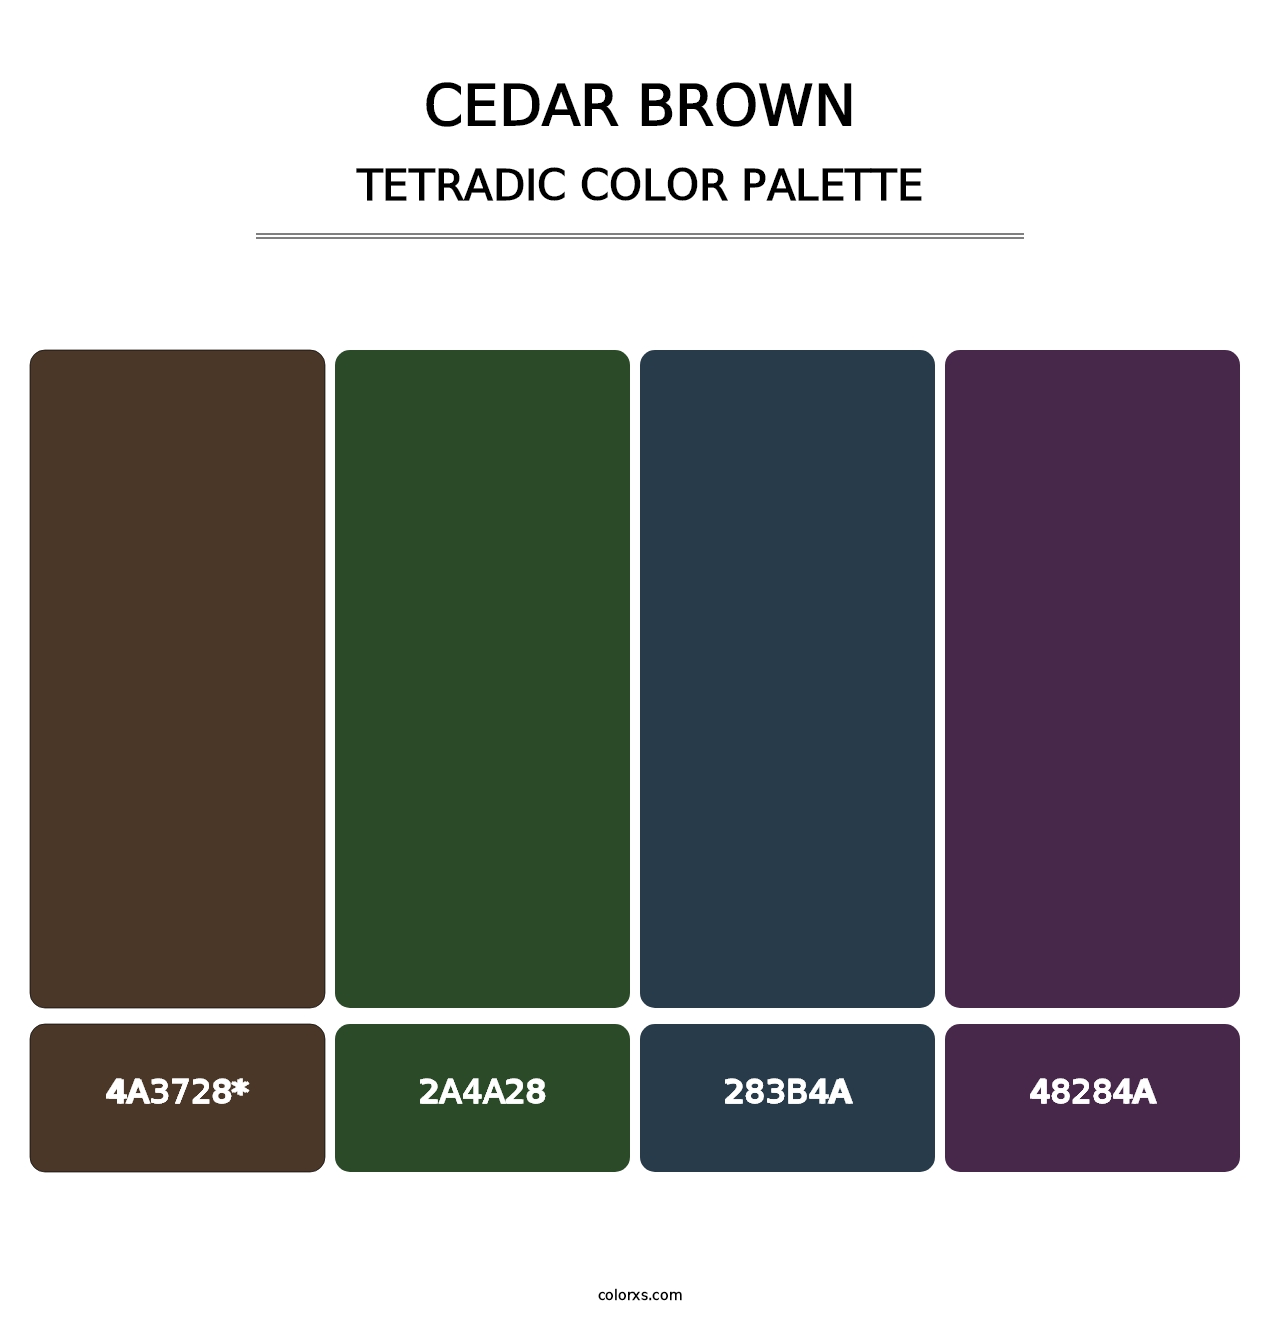 Cedar Brown - Tetradic Color Palette